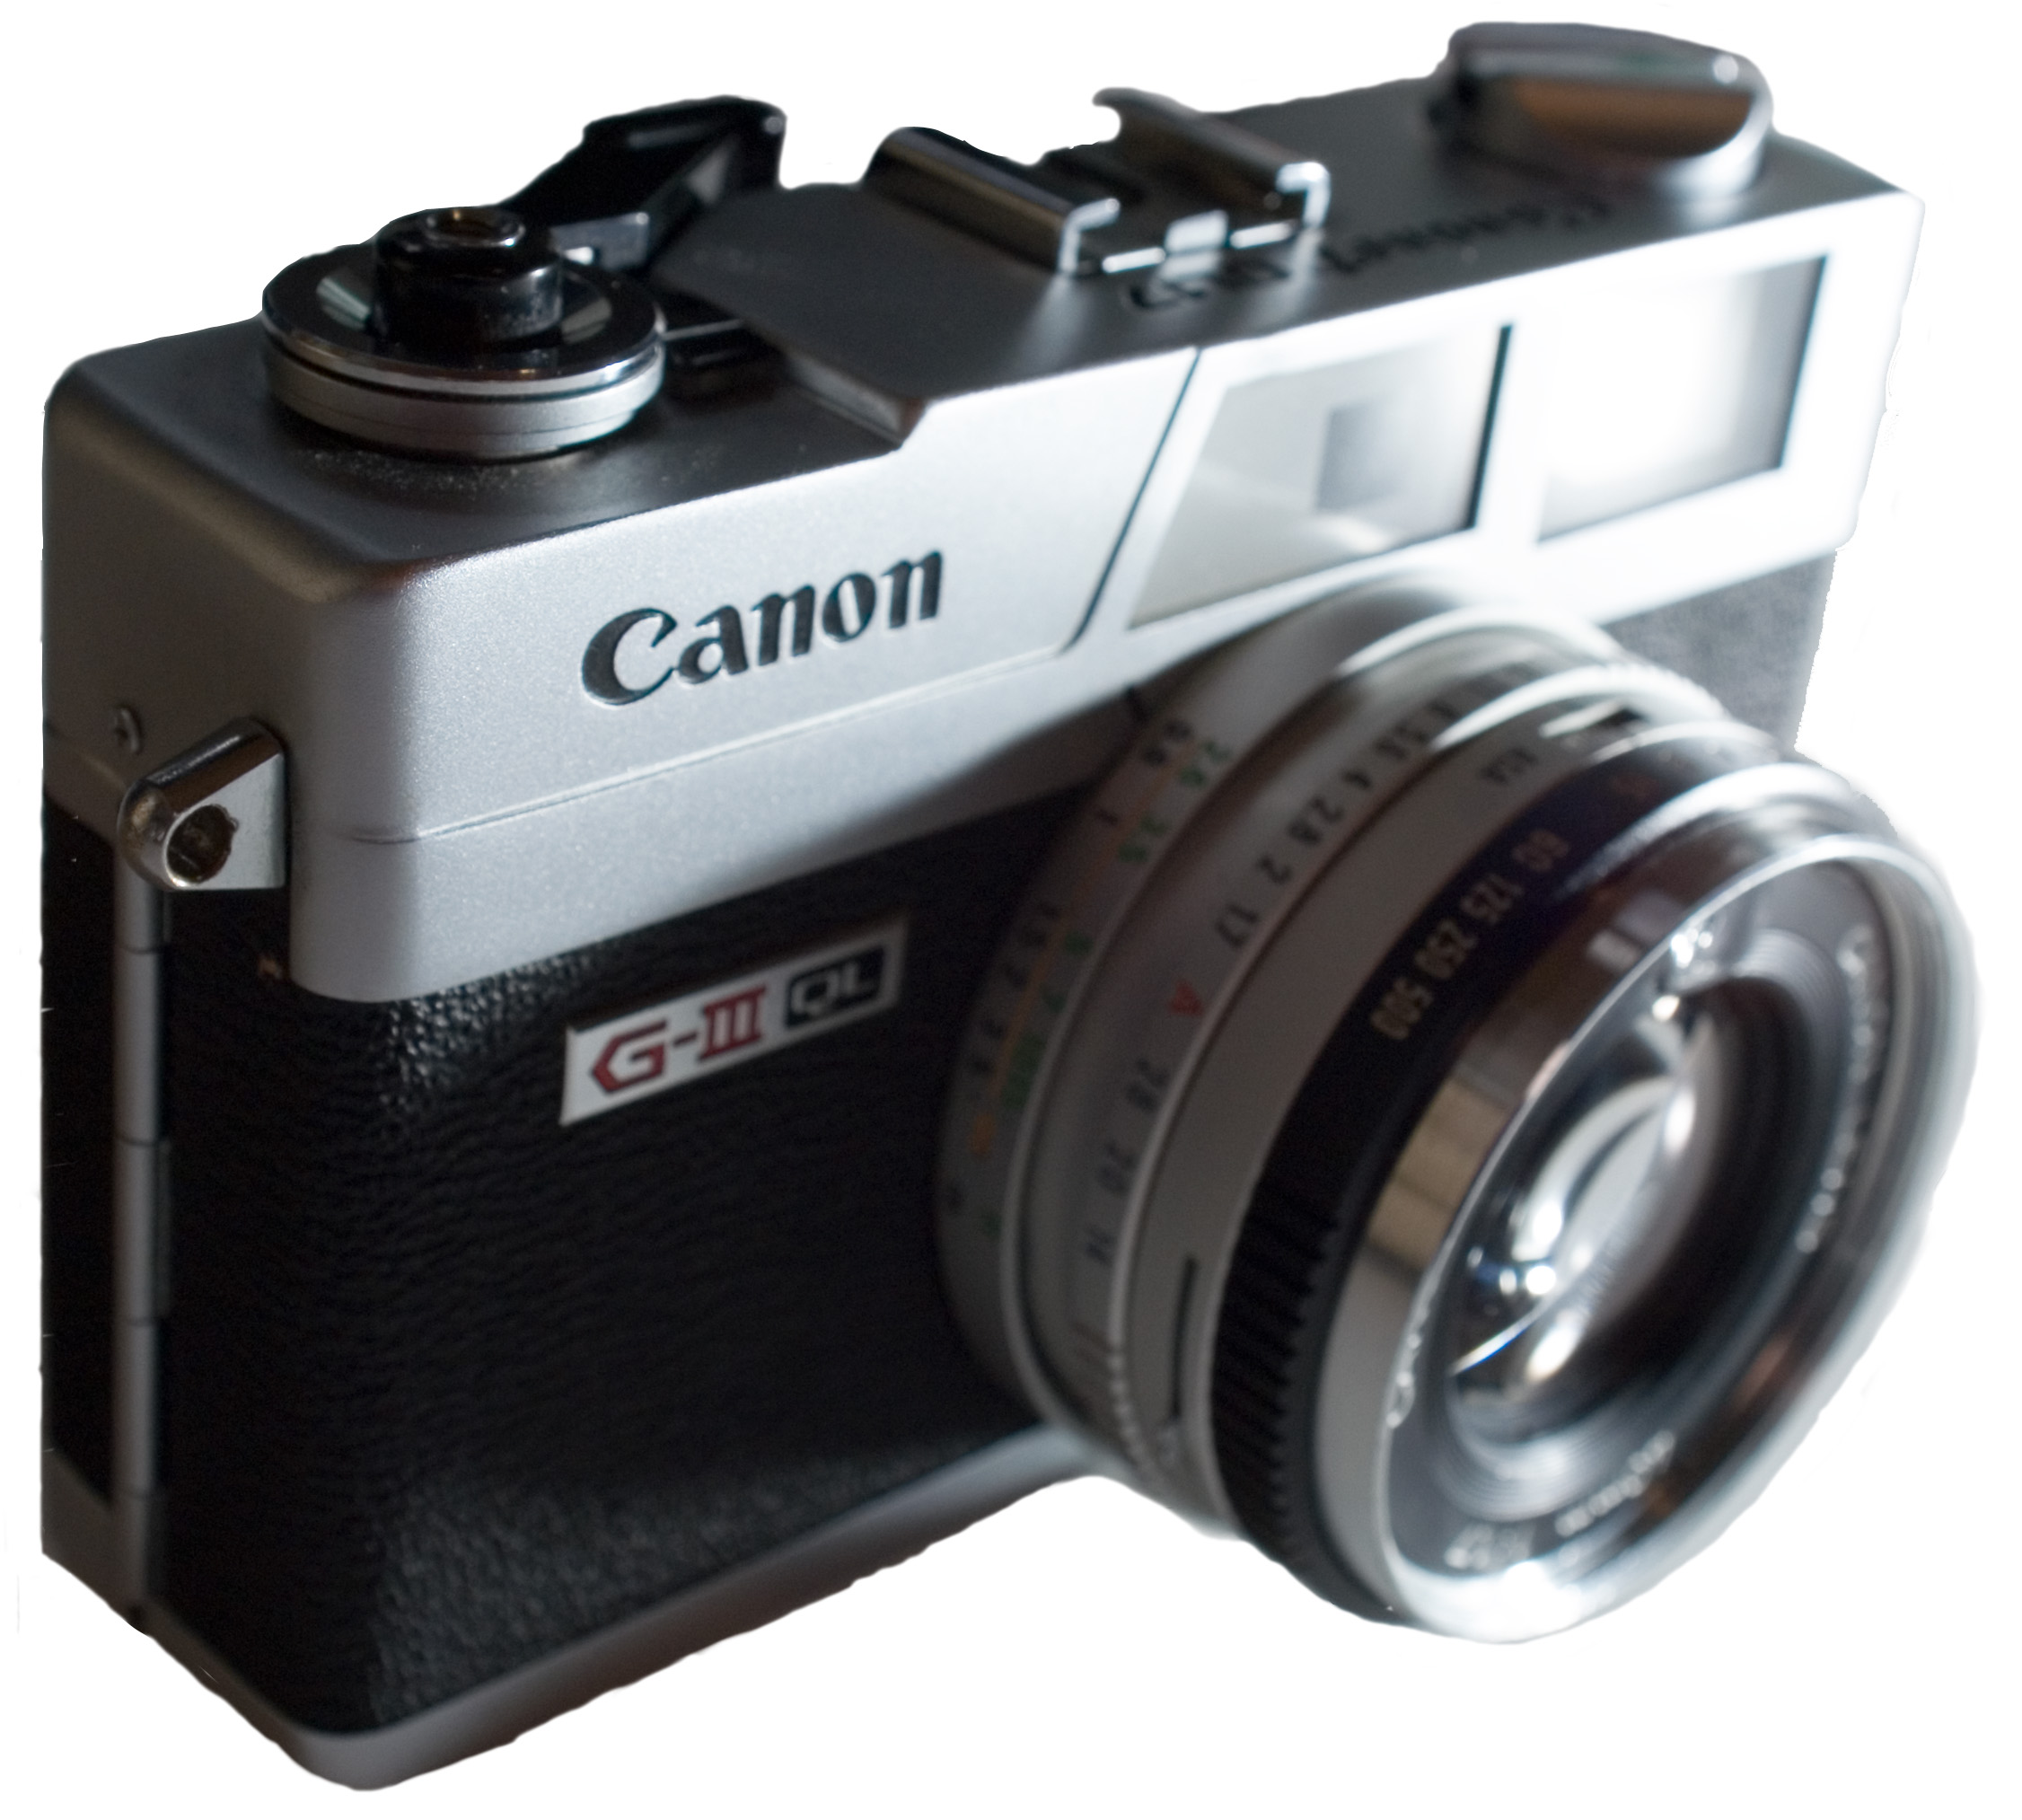 Canonet G-III QL17 - Wikipedia